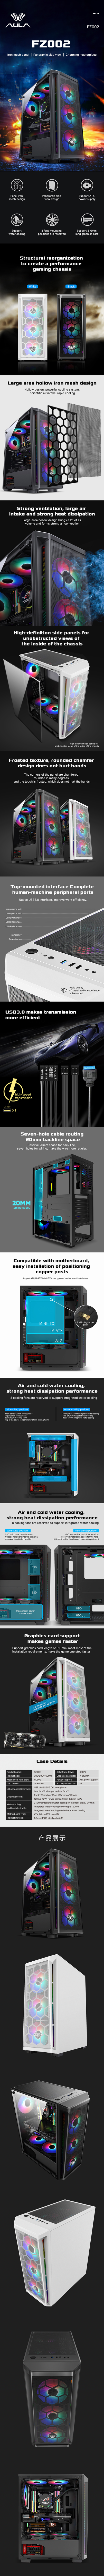 AULA Gaming PC Case FZ002-Black  Iron Mesh Panel Charming Masterpiece(图1)